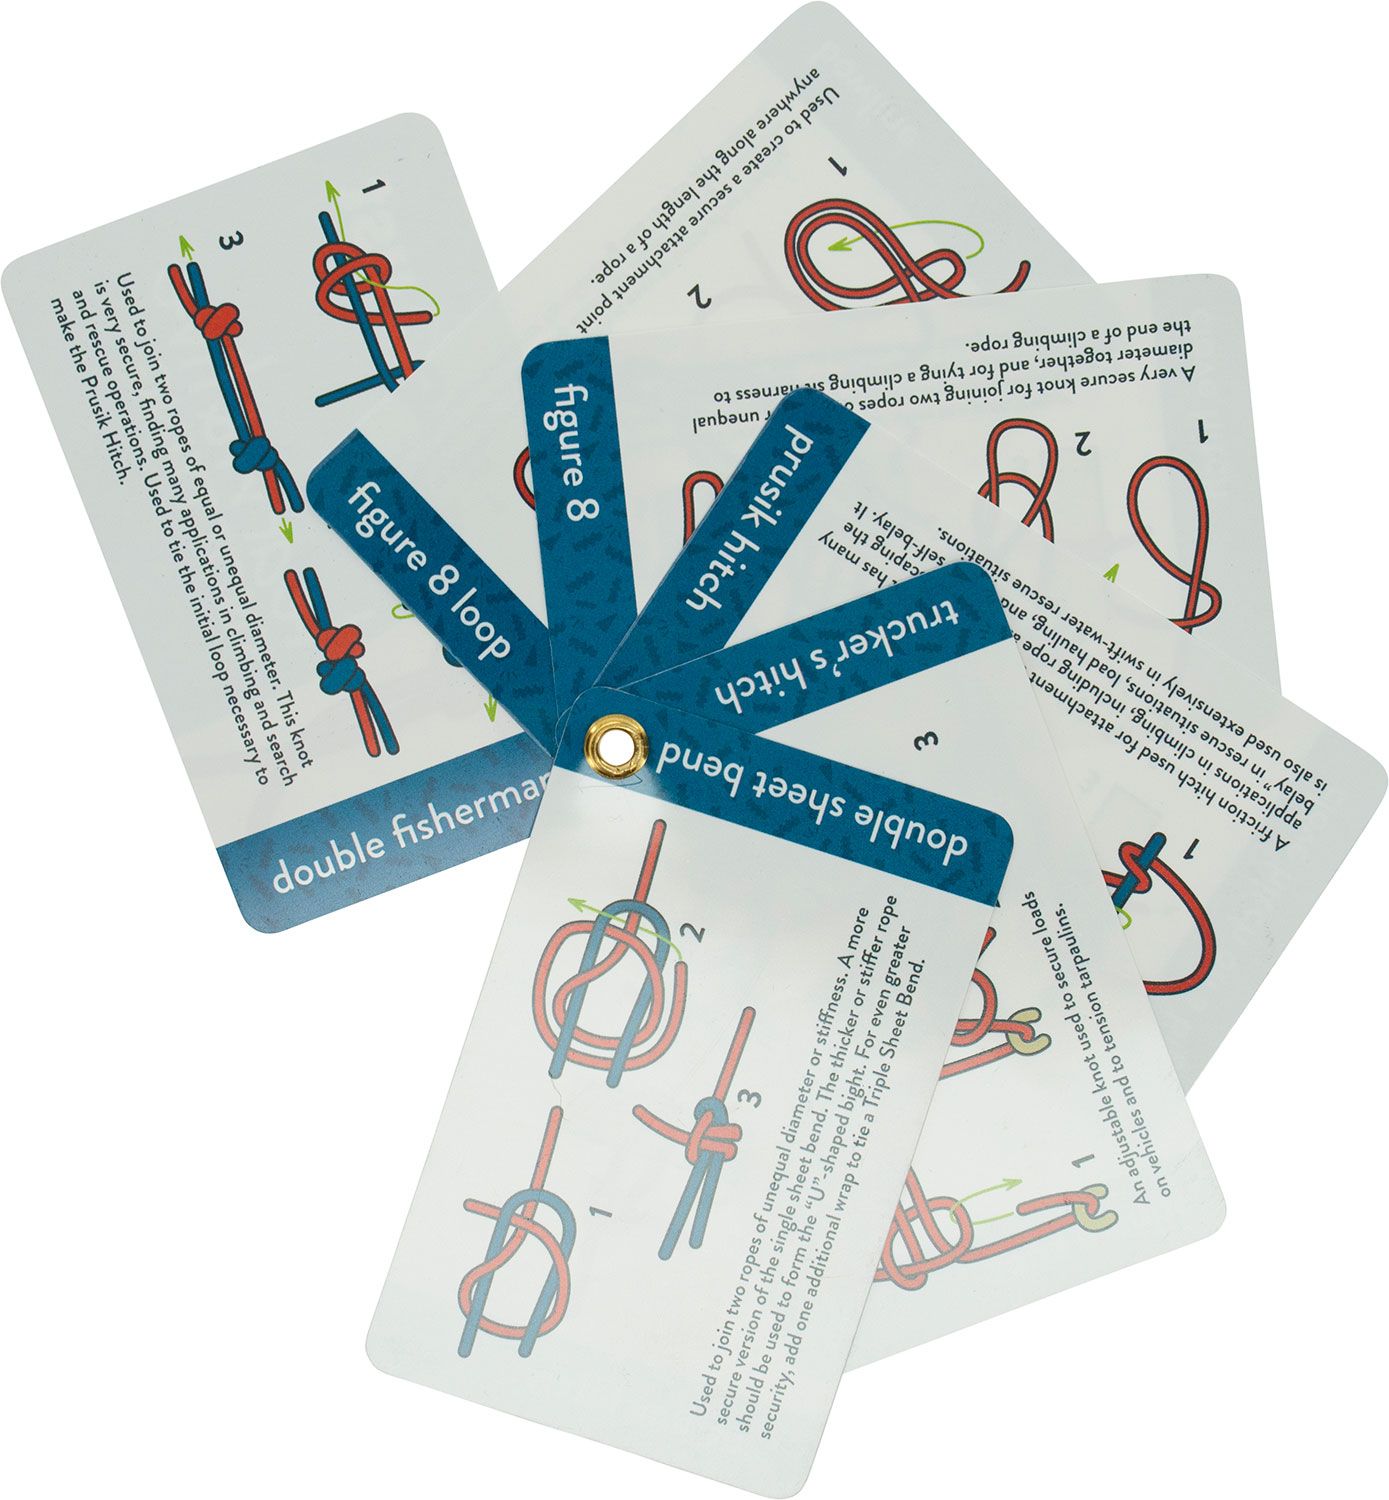  ReferenceReady Complete Knot Card Bundle - 7 Pocket Knot  Books